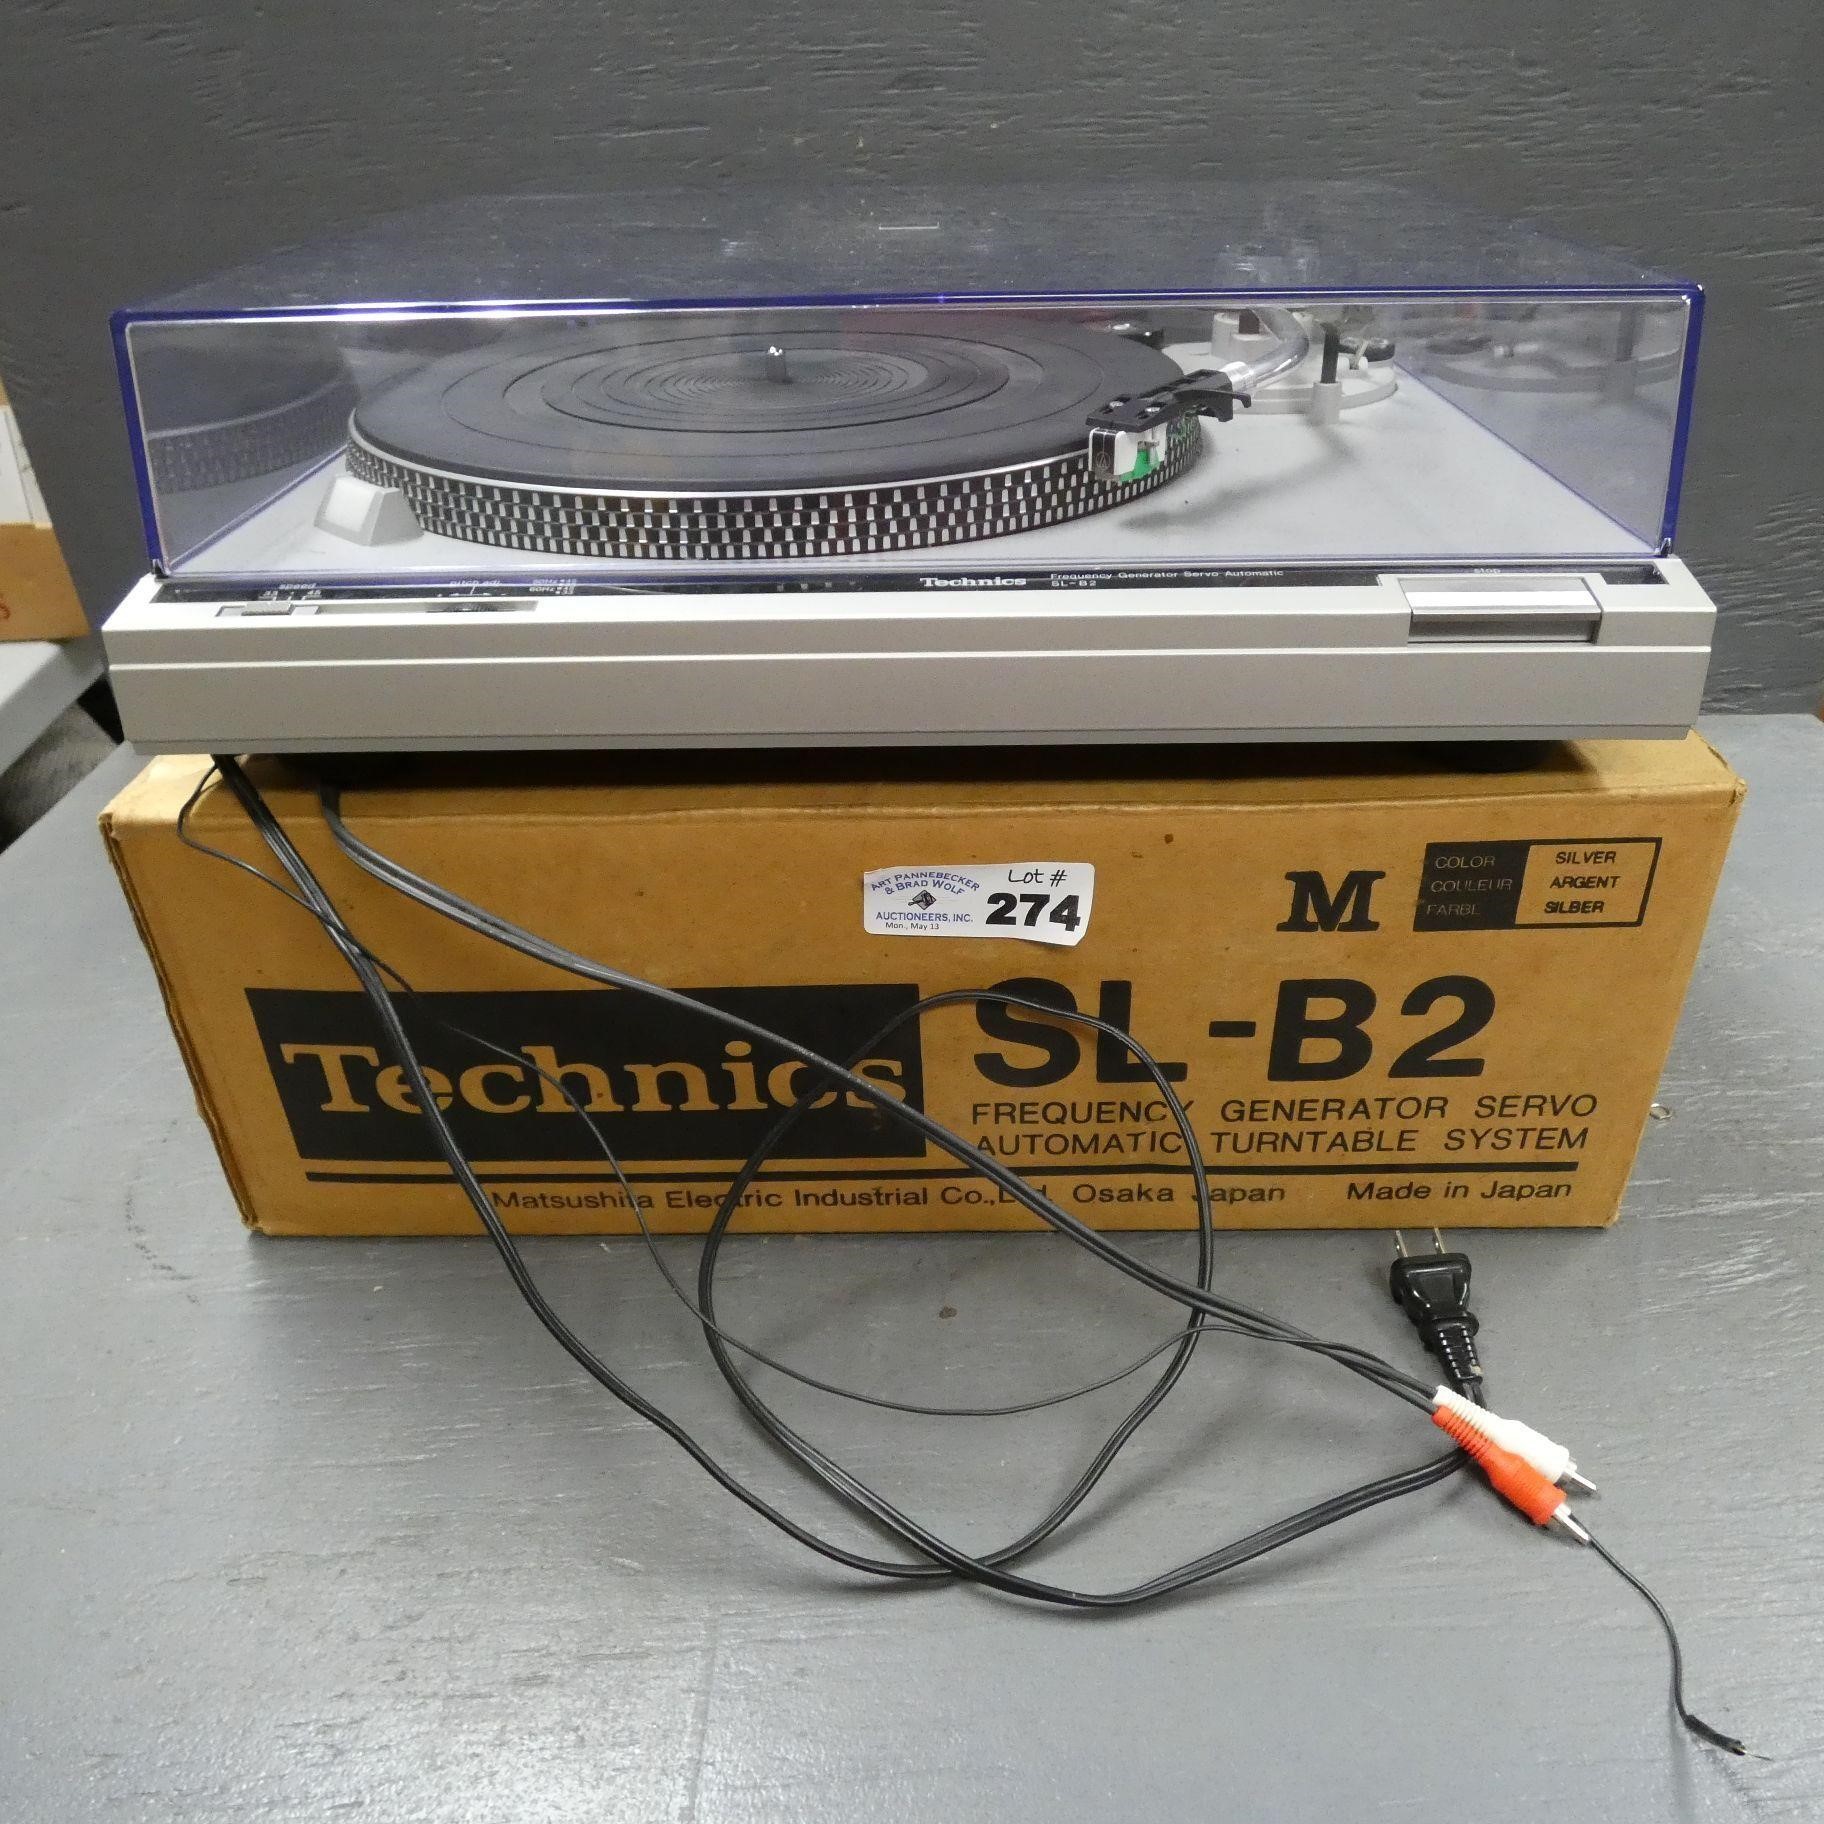 Technics SL-B2 Record Turntable in Box